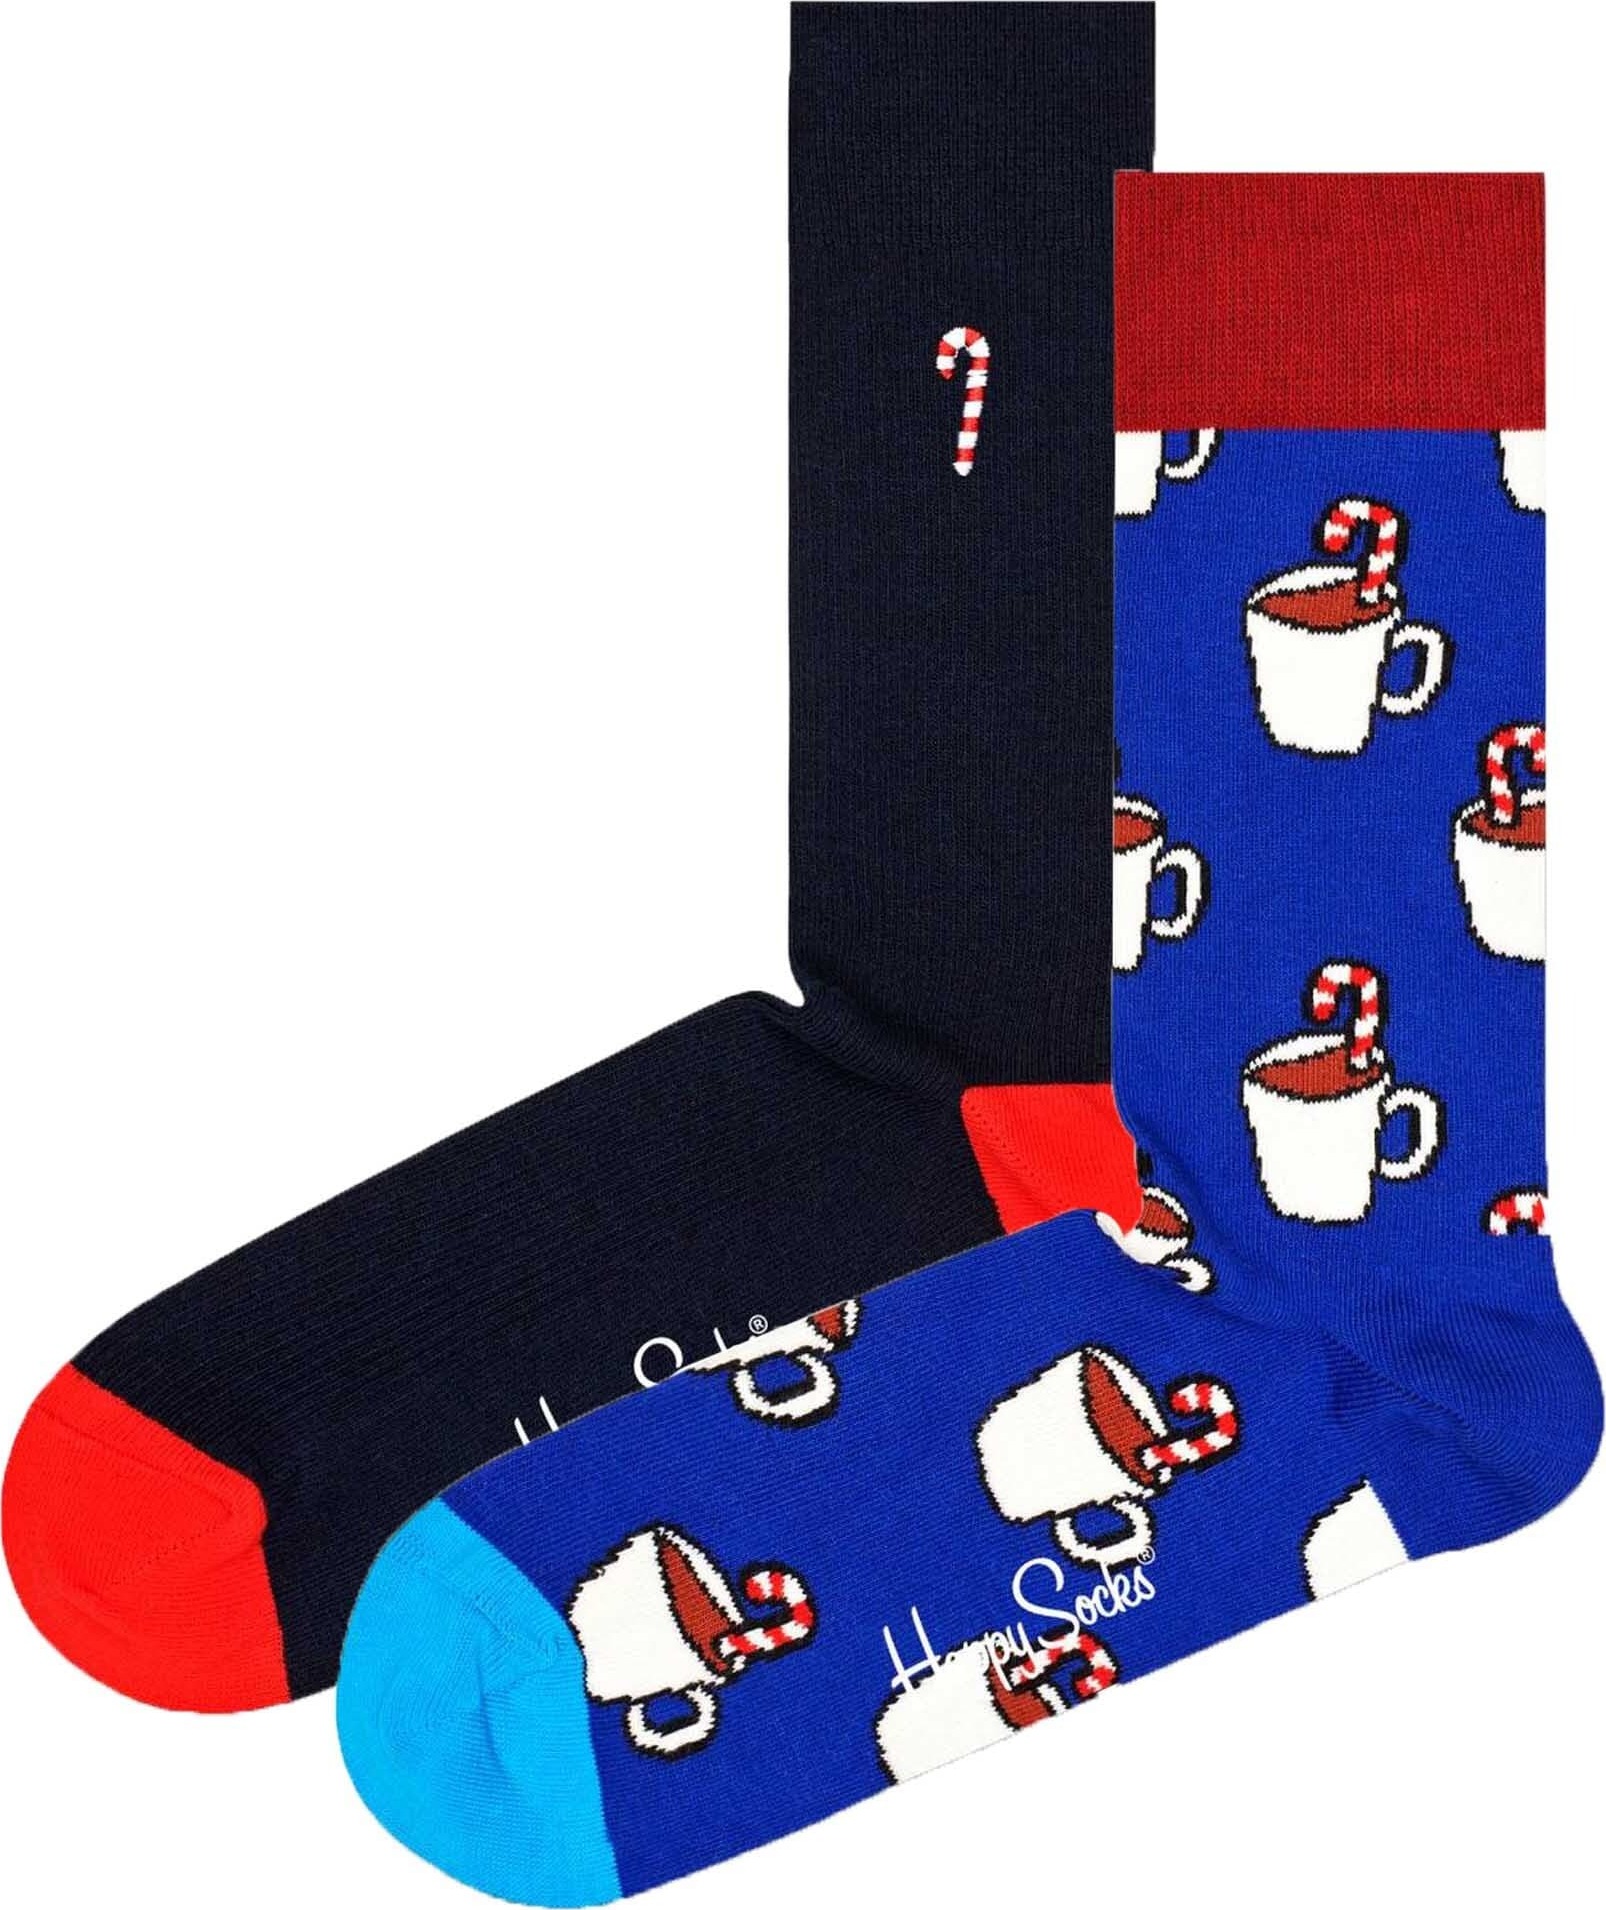 Happy Socks Ponožky modrá / tmavě červená / černá / bílá